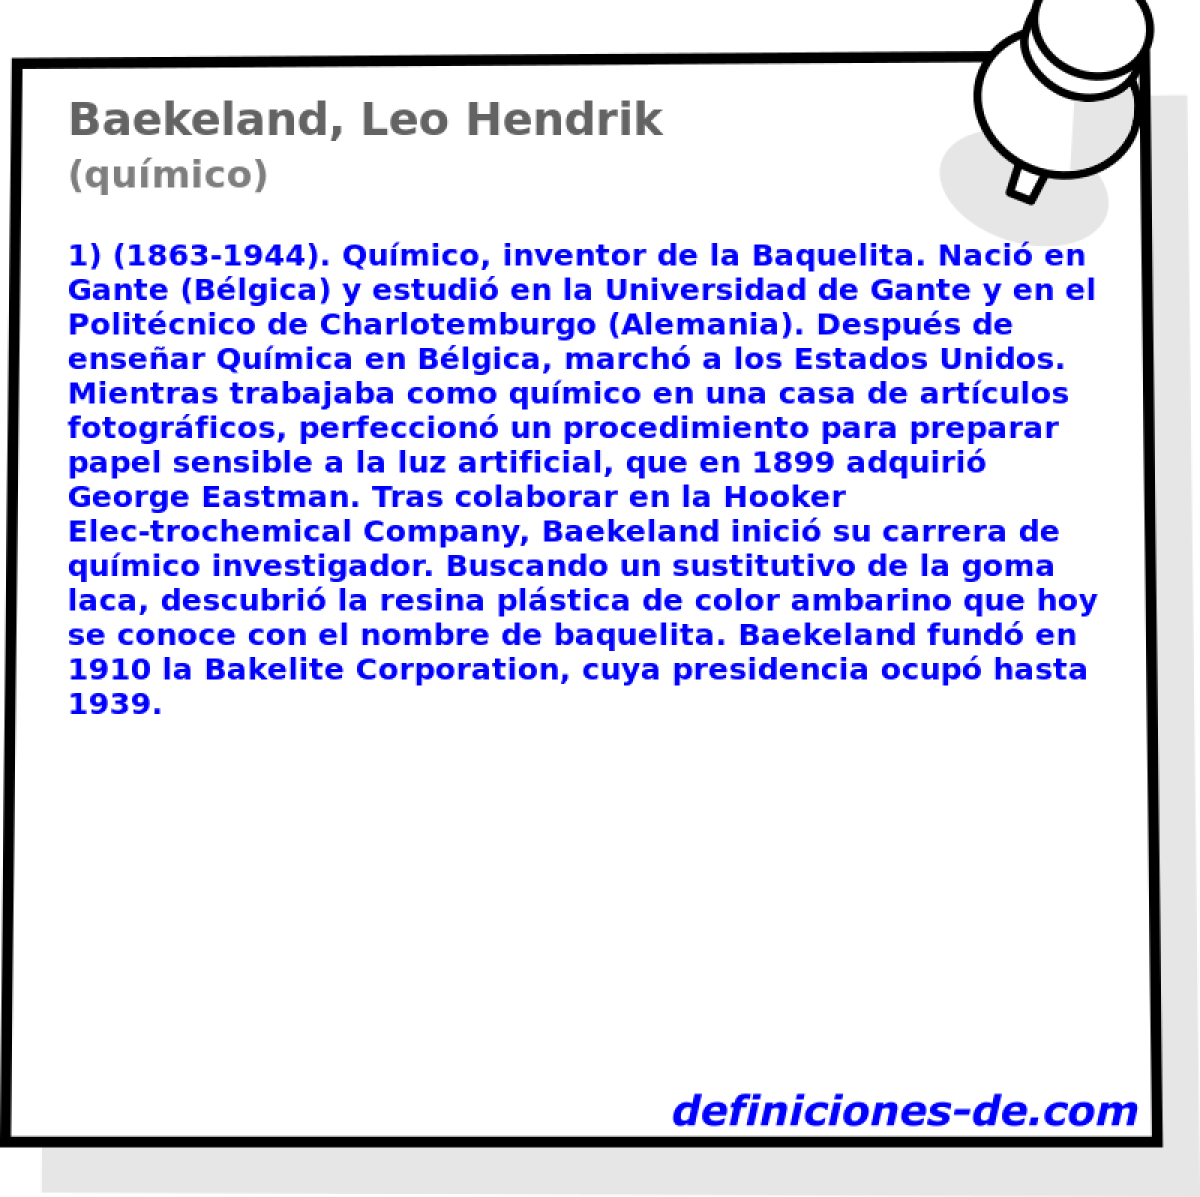 Baekeland, Leo Hendrik (qumico)